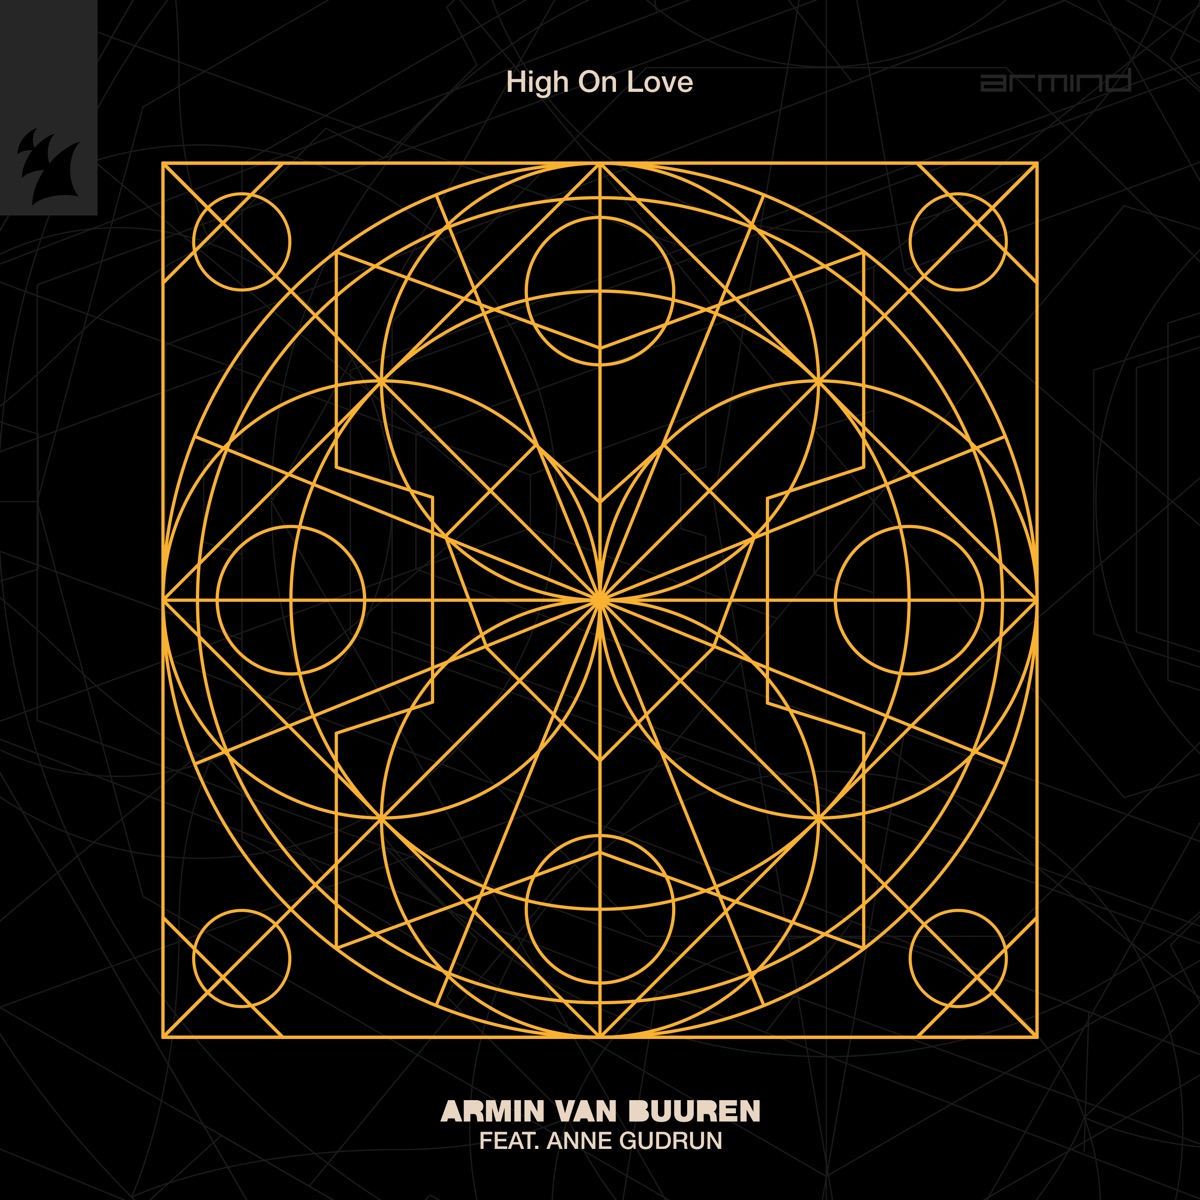 Armin Van Buuren - High On Love (Feat. Anne Gudrun) 1